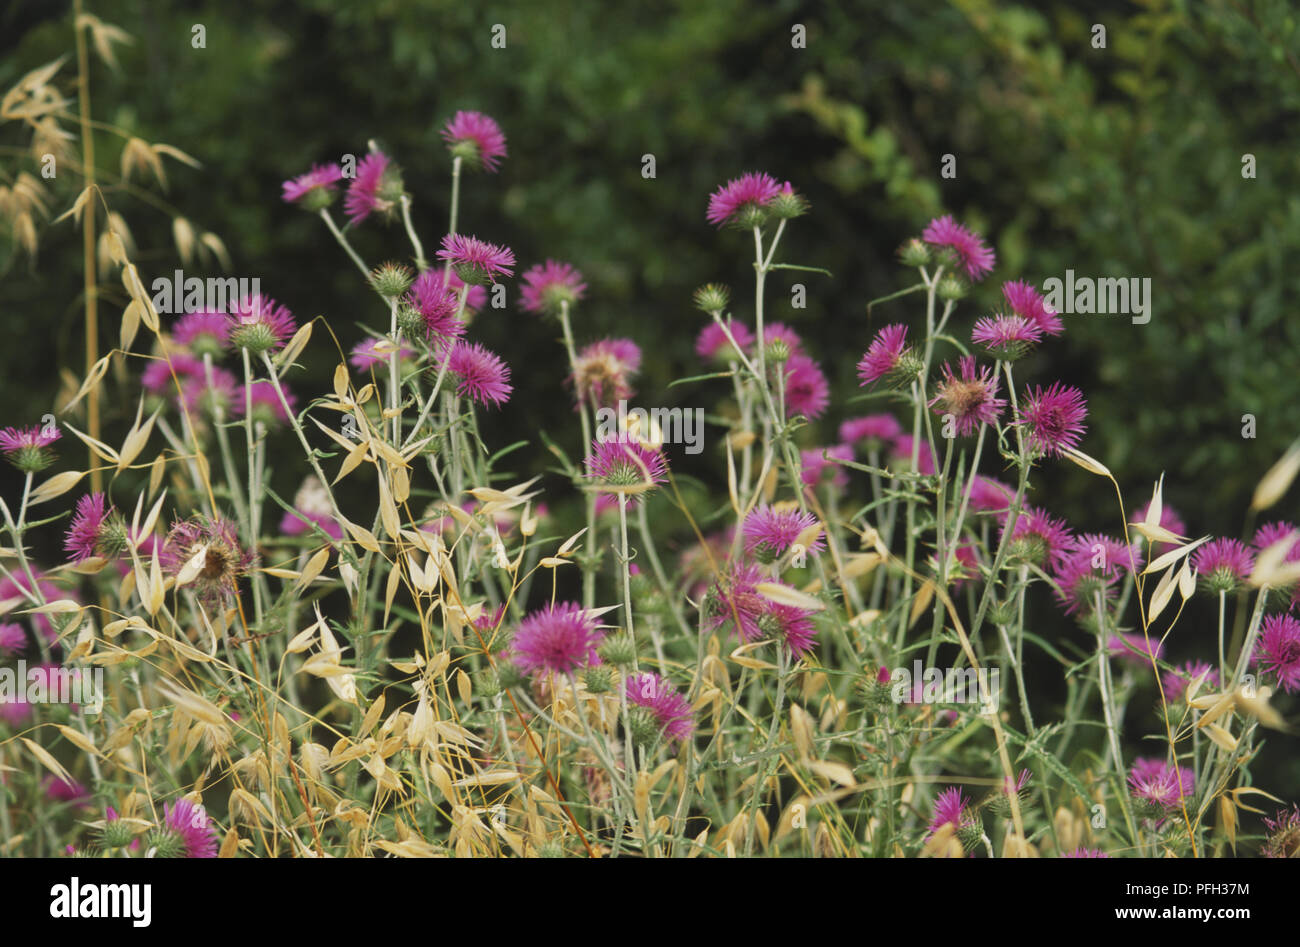 Italien, Toskana, wilddistel Blumen in einem Feld, close-up Stockfoto